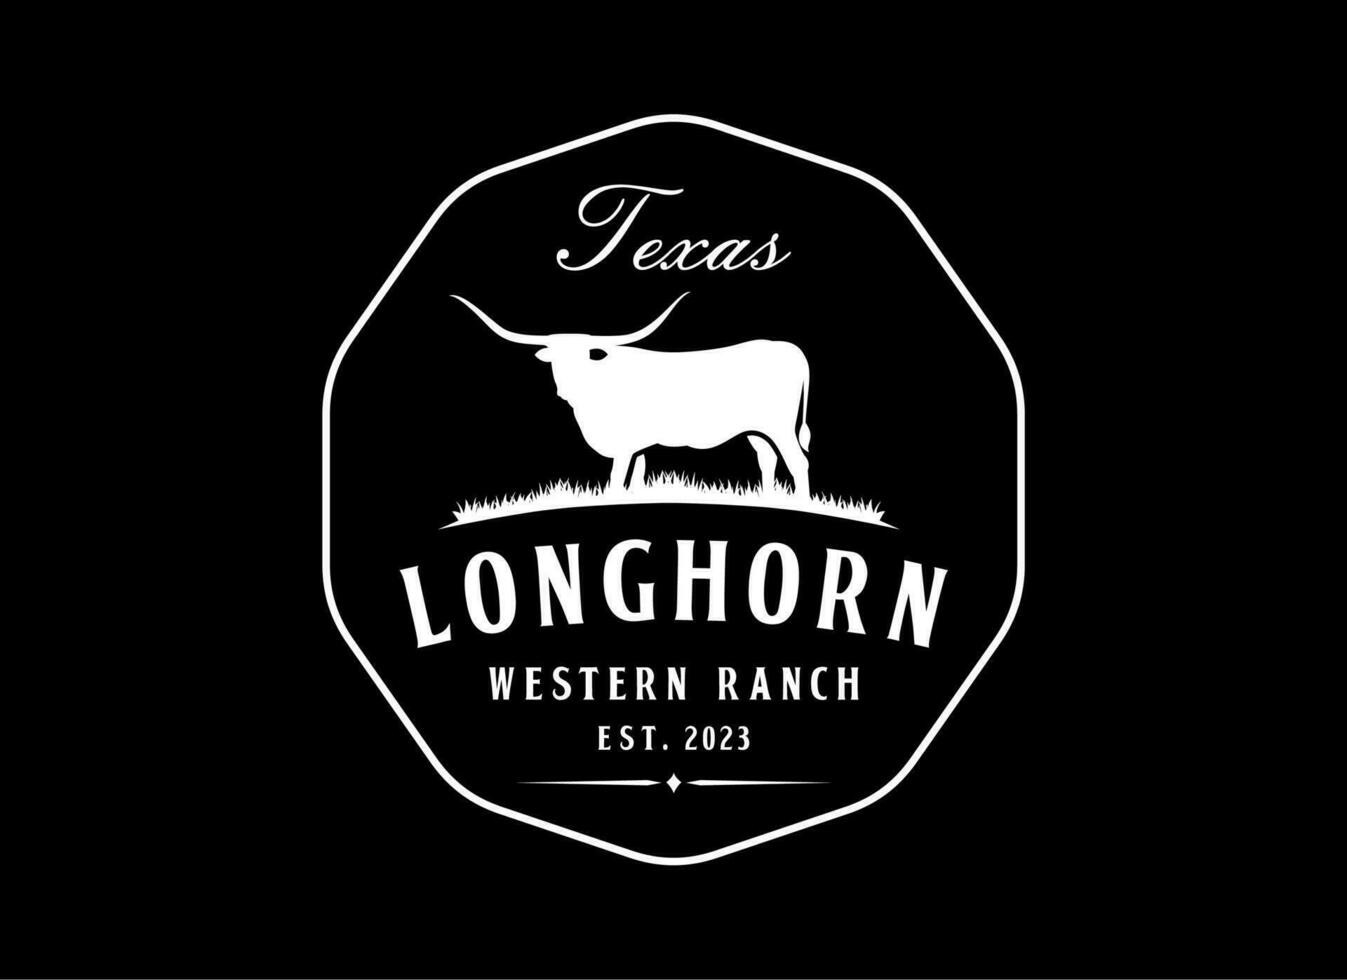 wijnoogst Texas Longhorn western stier insigne logo ontwerp vector